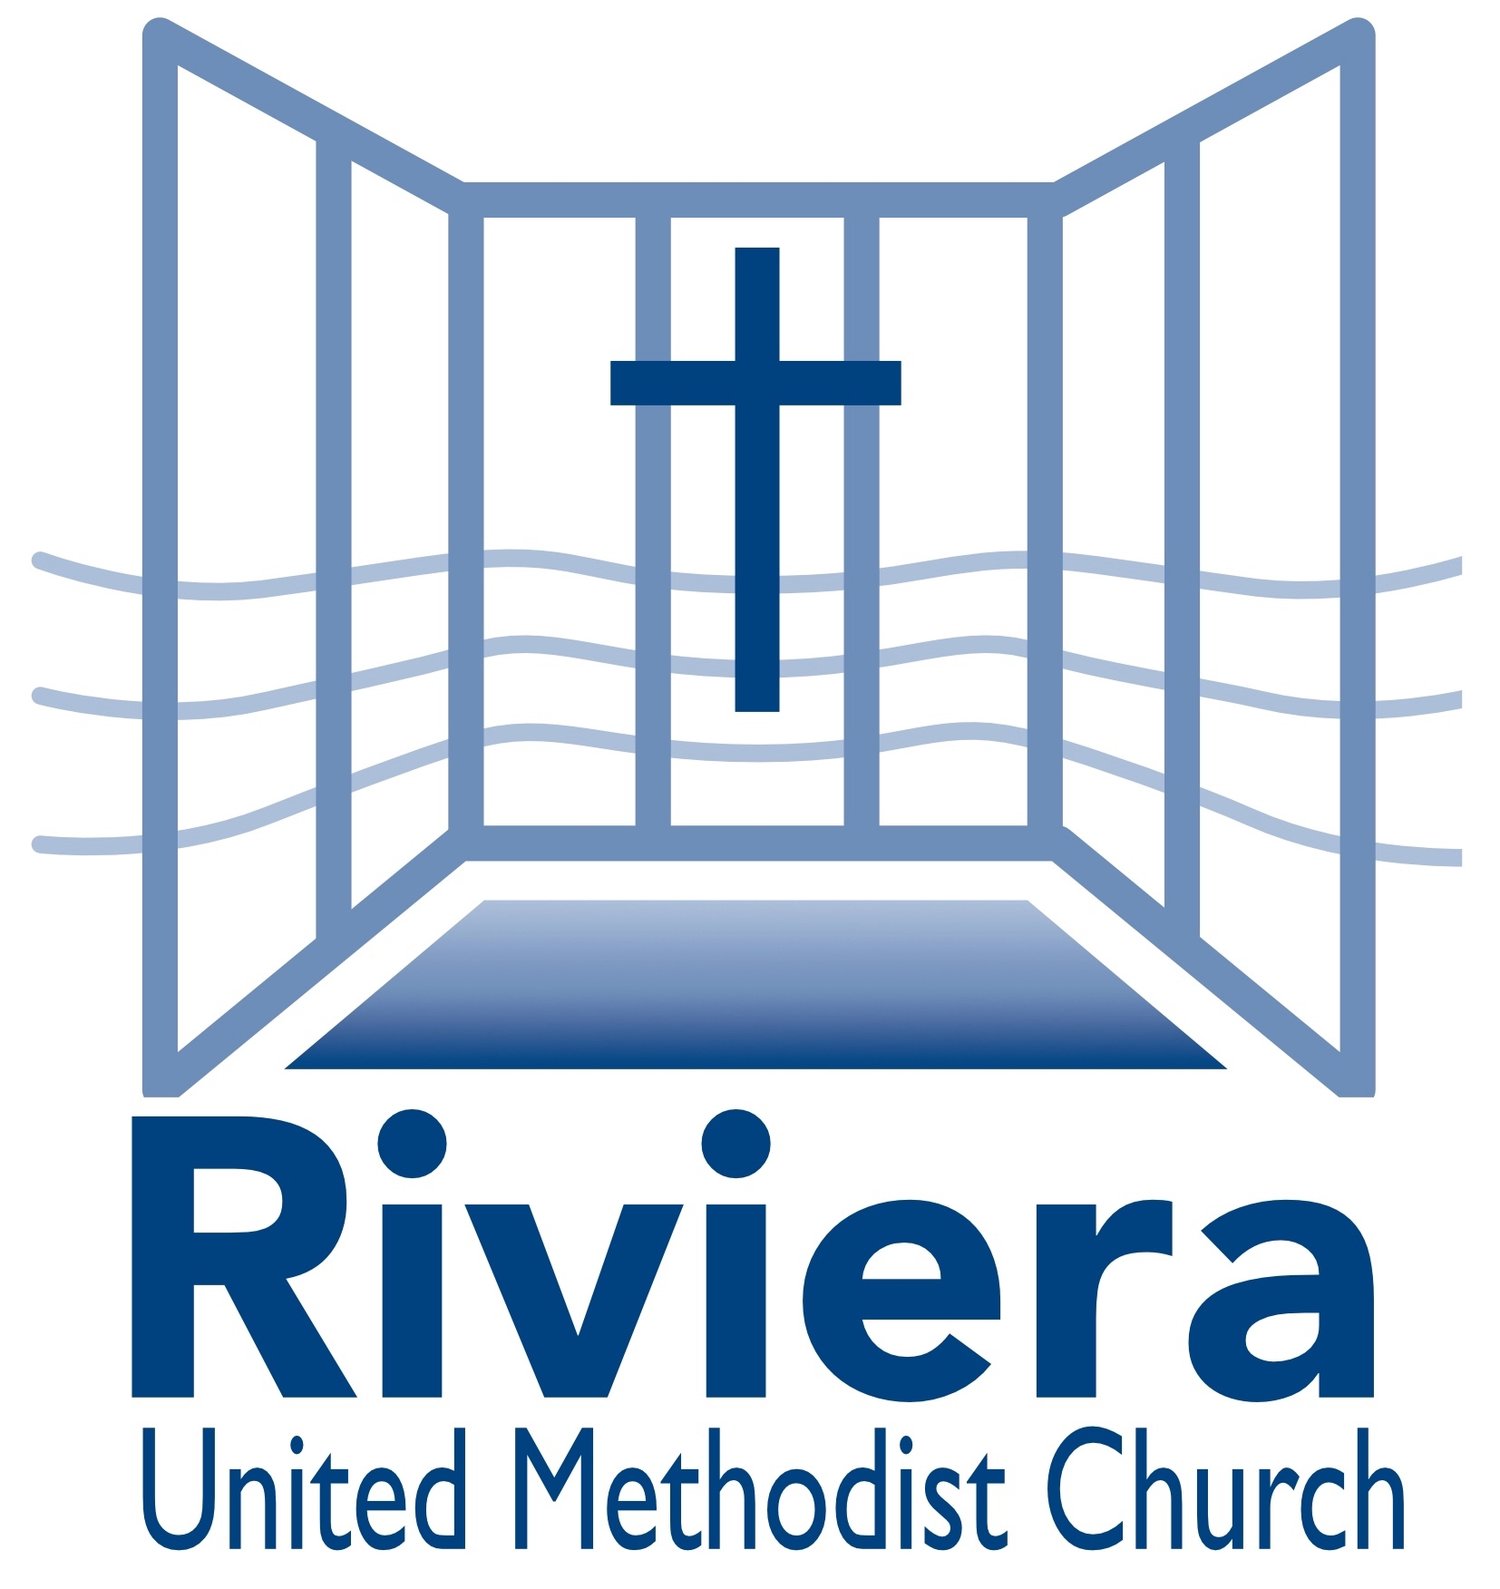 Riviera United Methodist Church